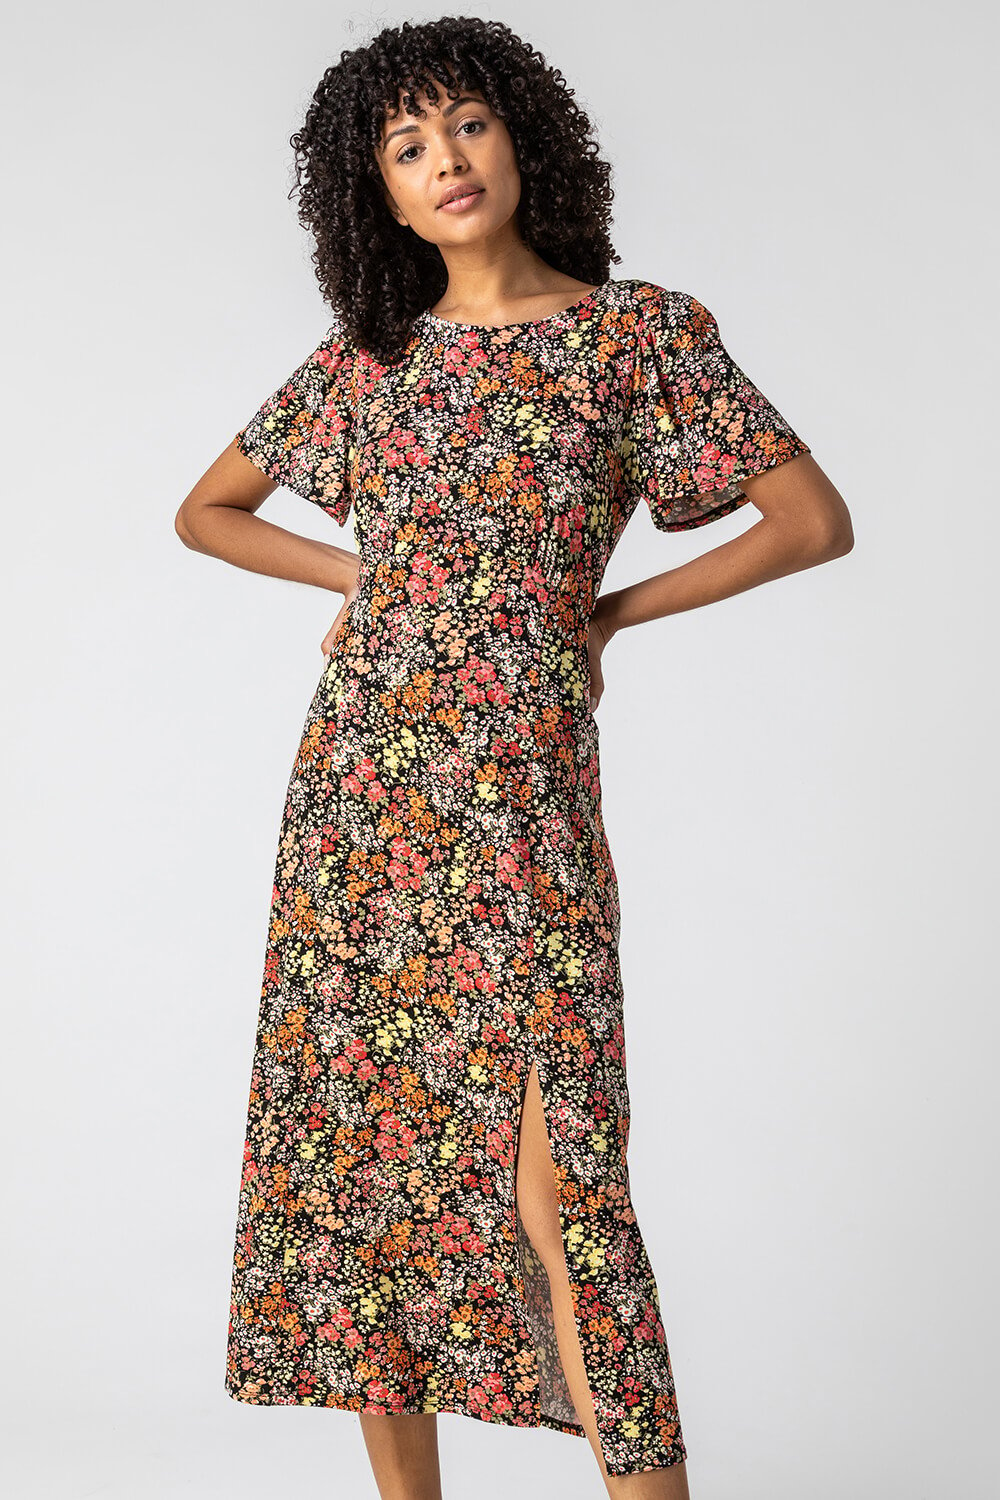 Floral Print Side Split Dress in Multi - Roman Originals UK